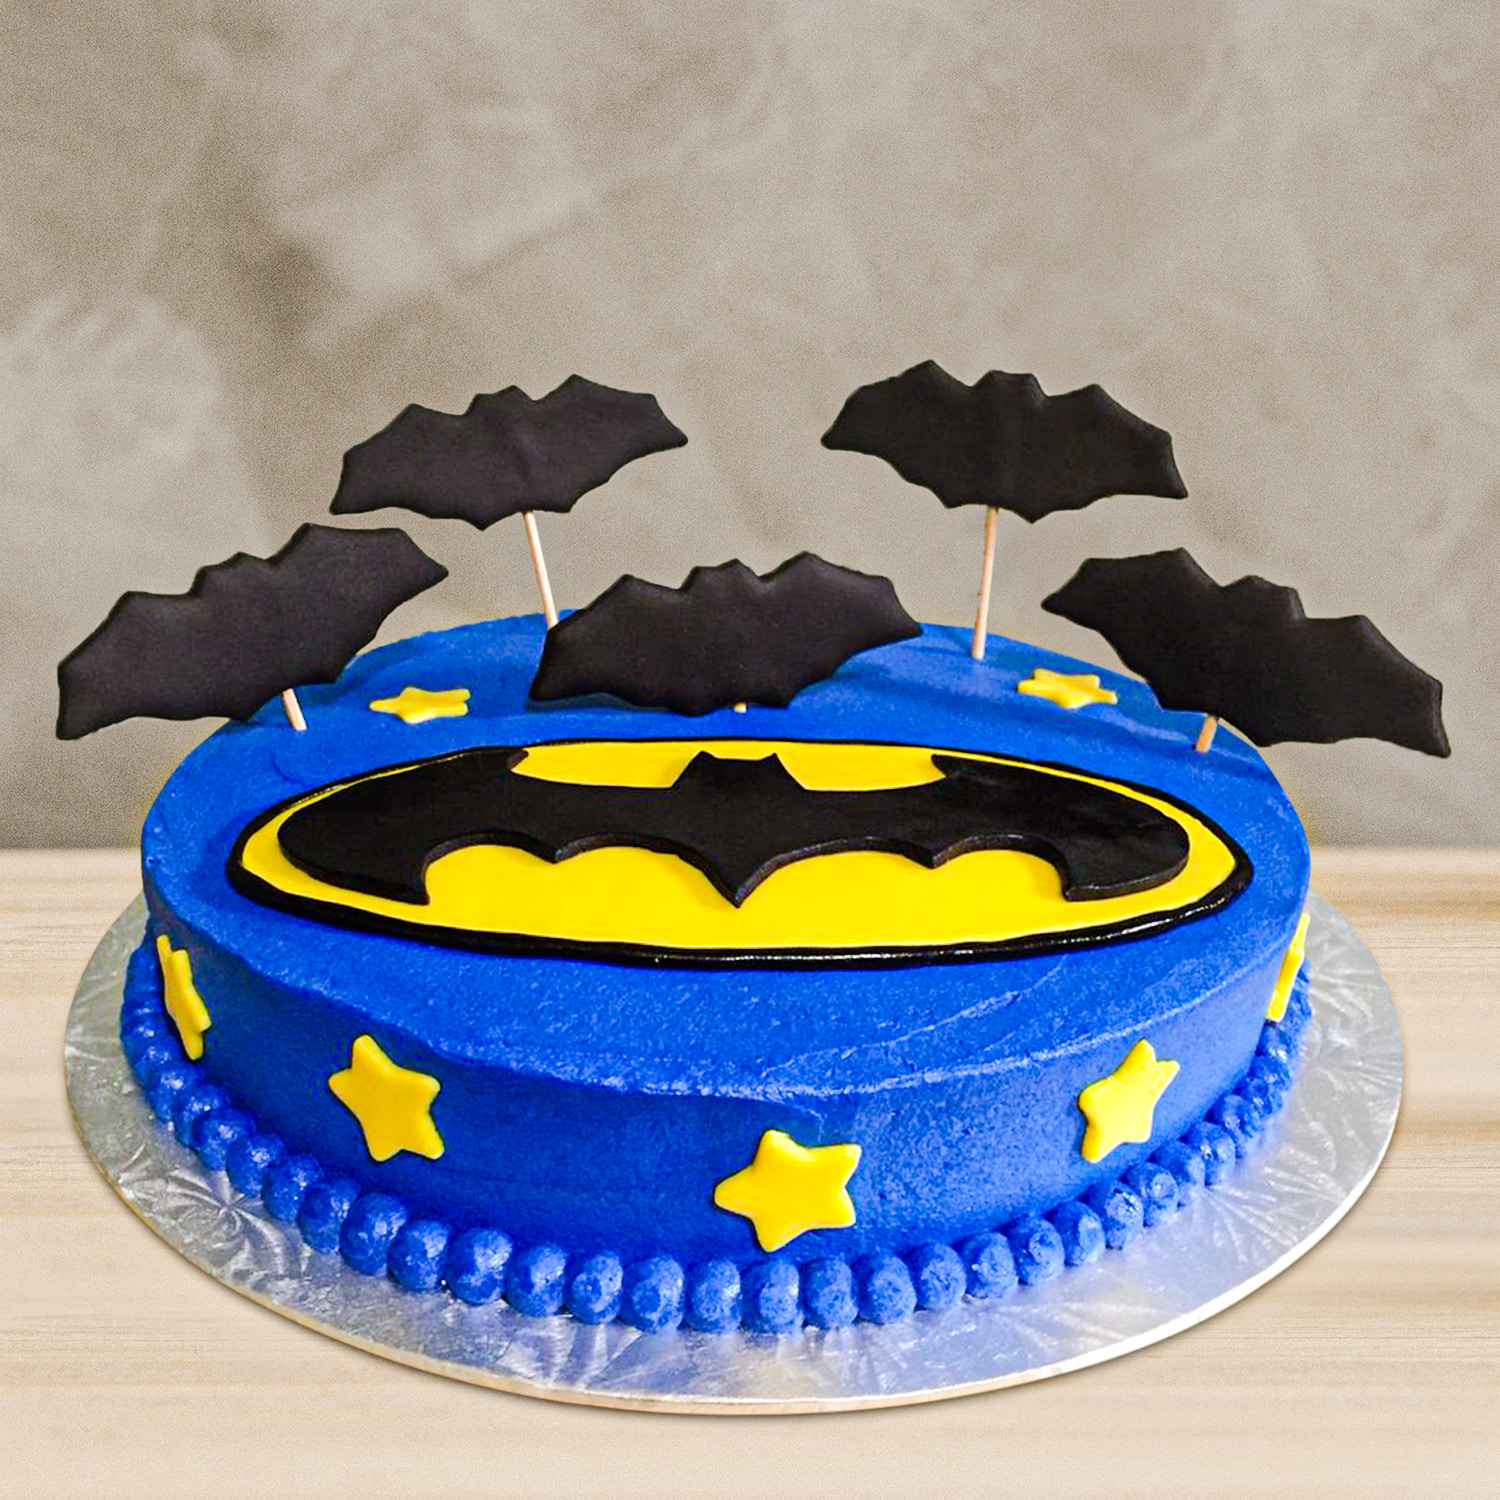 Avengers Marvel Superheroes Birthday Cake Tutorial | Superhero Spiderman Superman  Batman Cake Design - YouTube